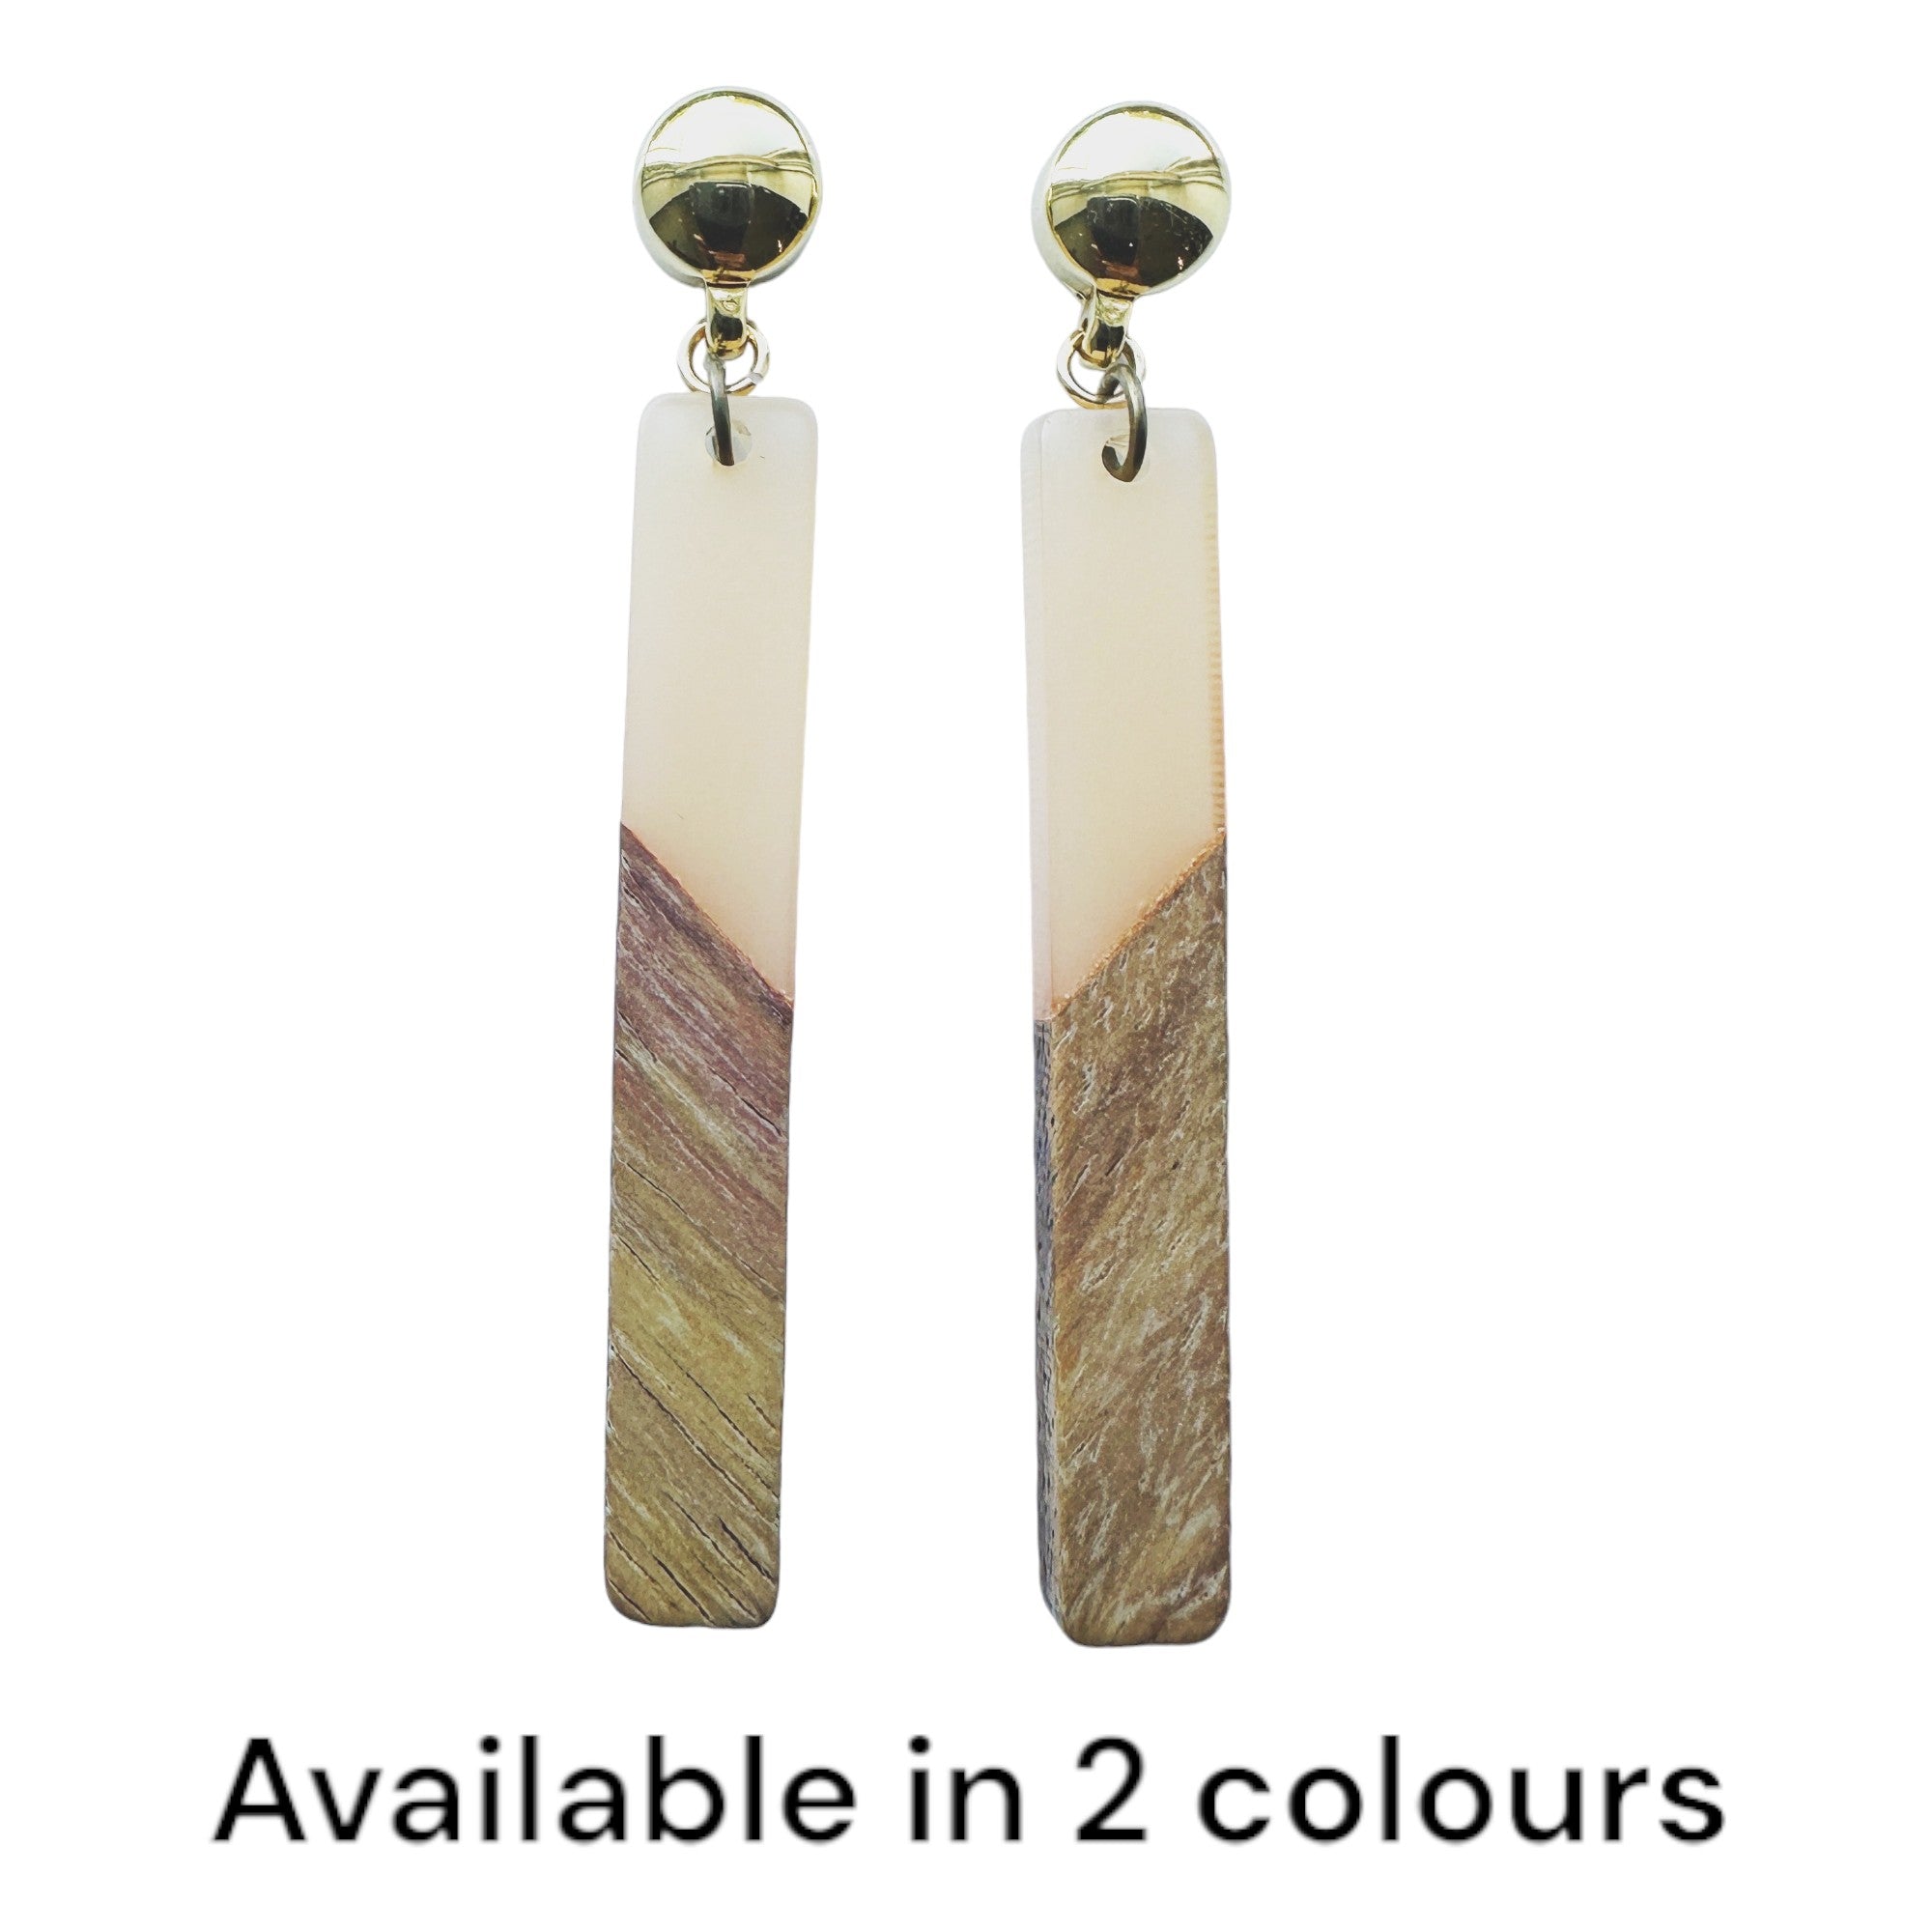 TI-GO translucent wood earrings